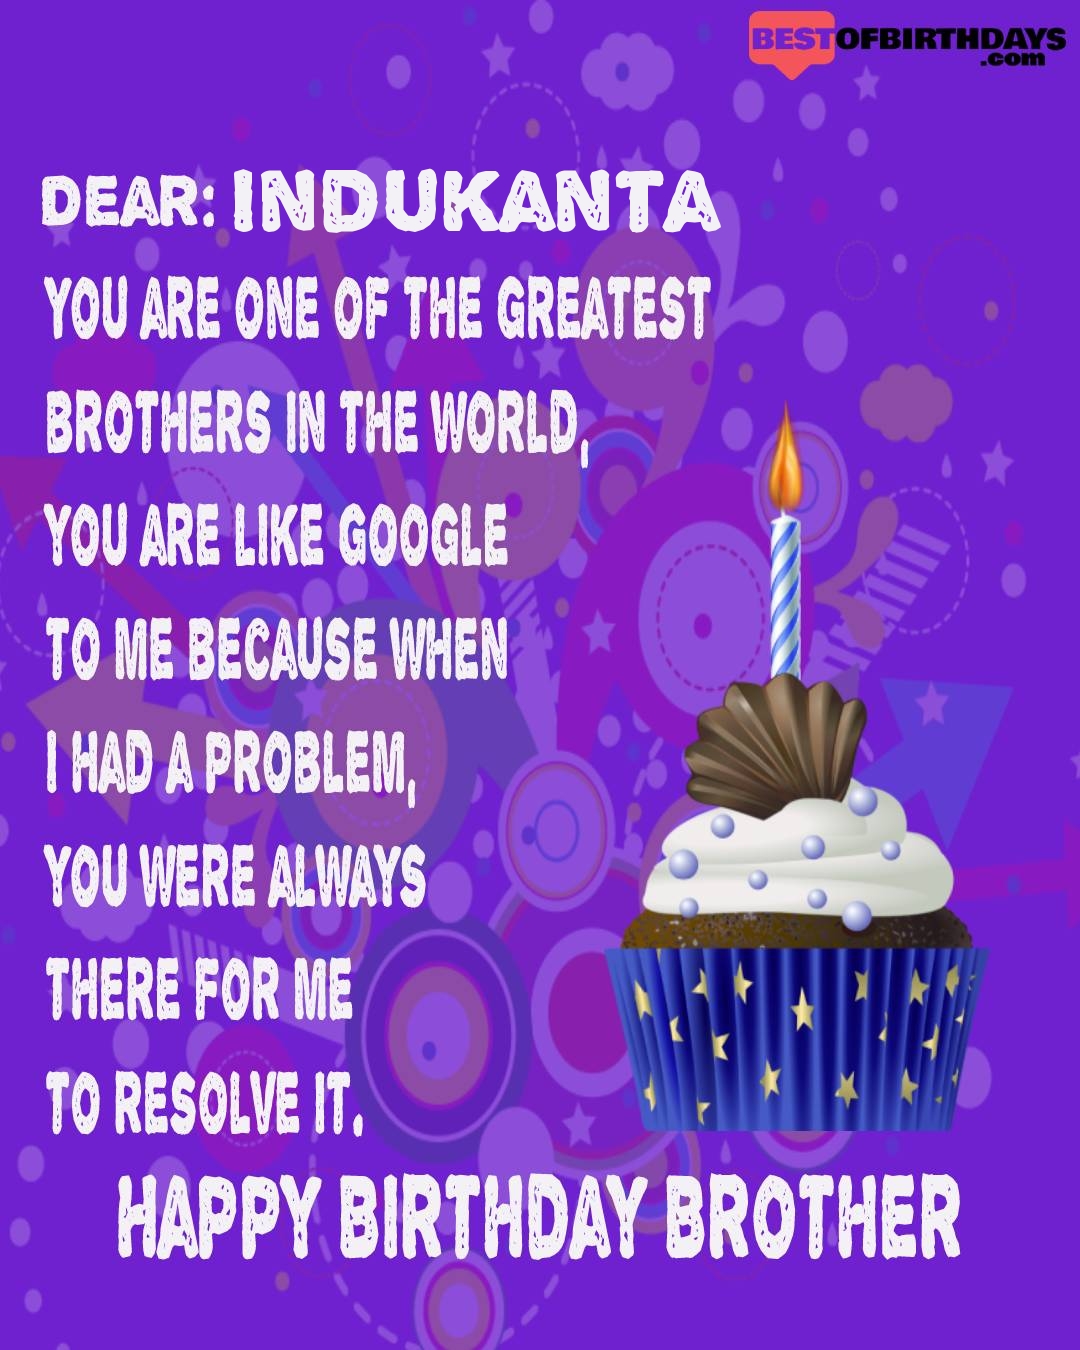 Happy birthday indukanta bhai brother bro